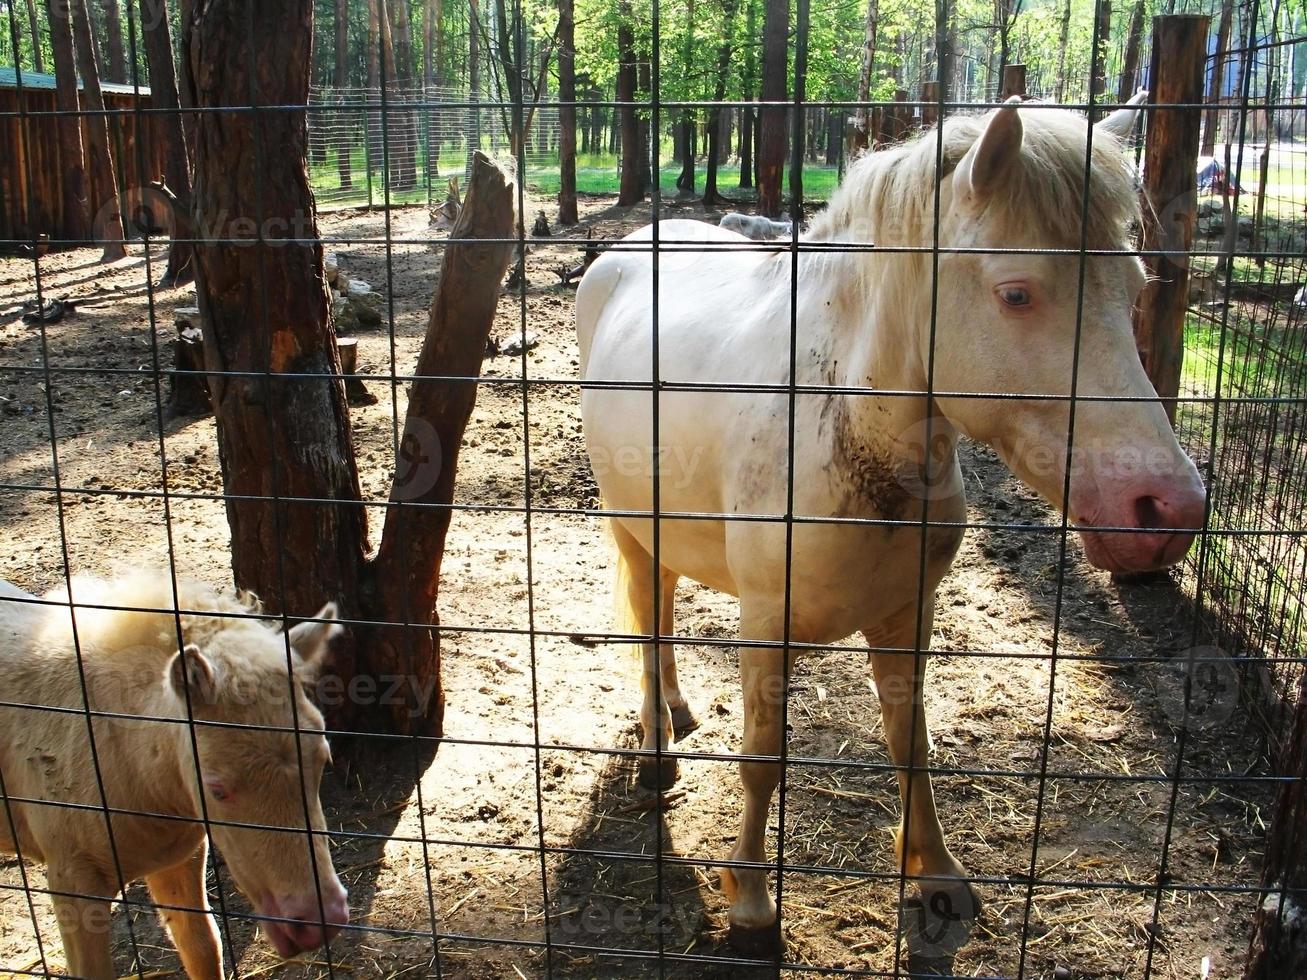 pony bianco in fattoria in estate foto